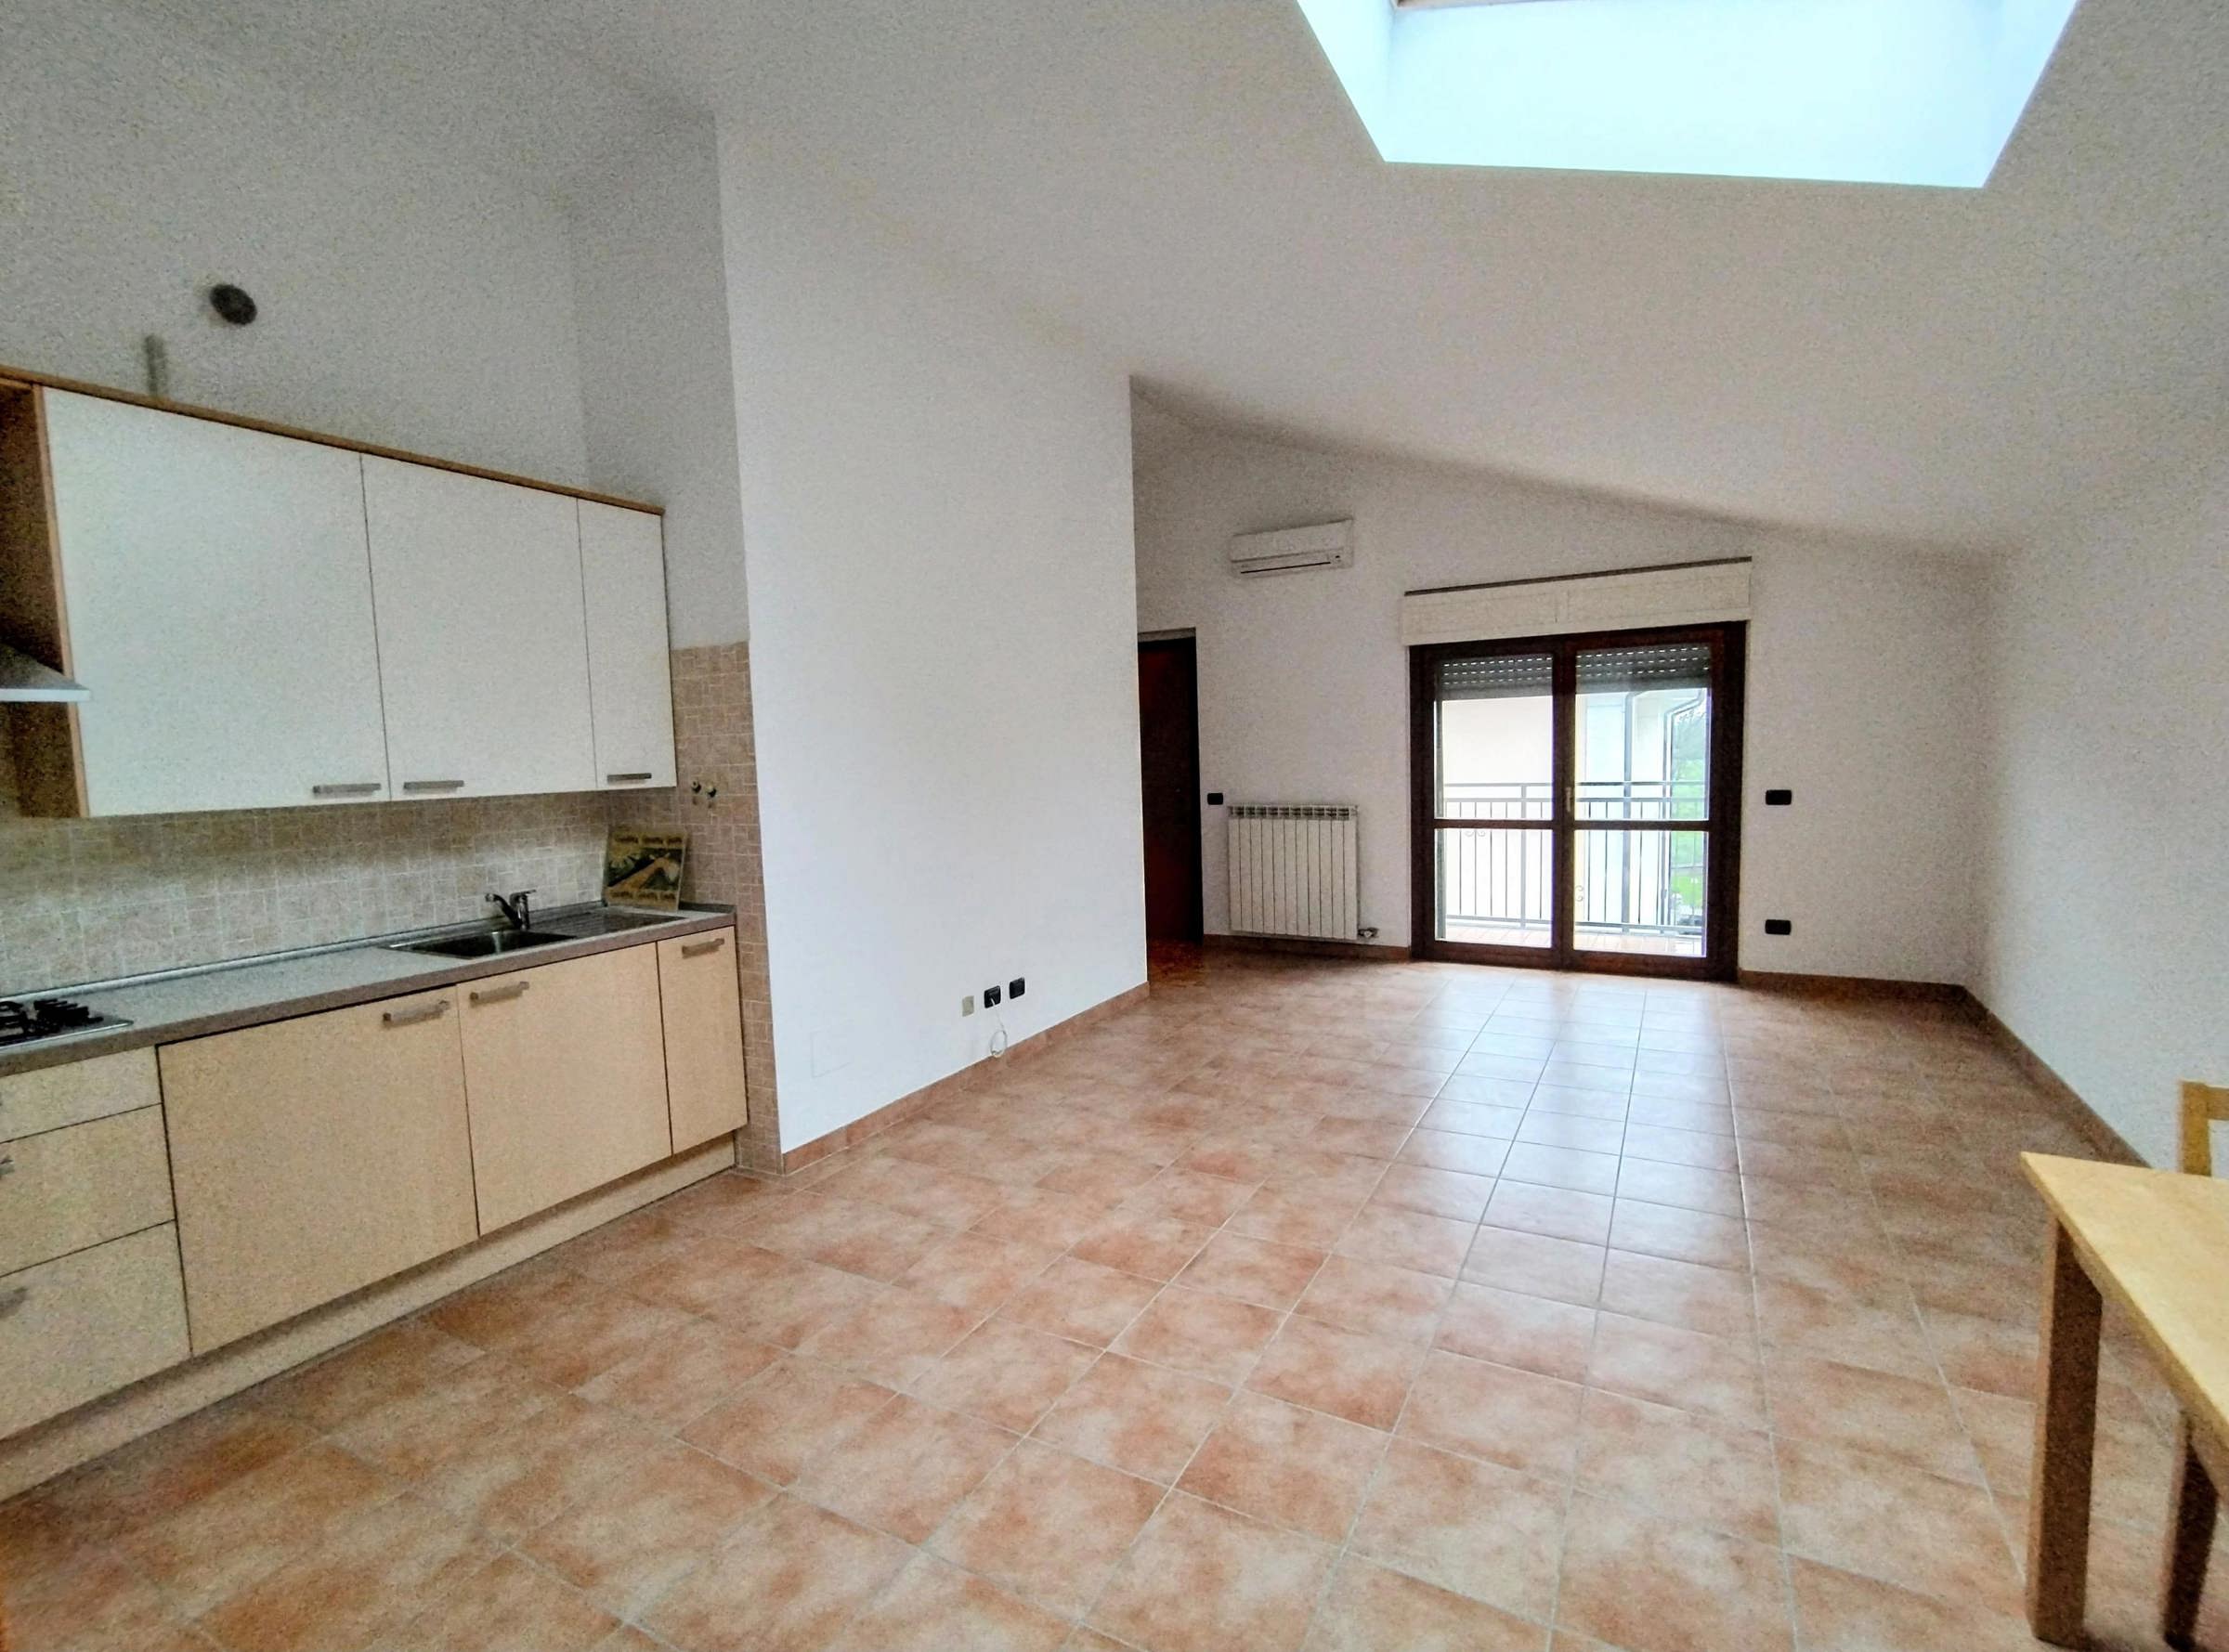 Vendita Bilocale Appartamento Bareggio Via Vigevano, 49 487537